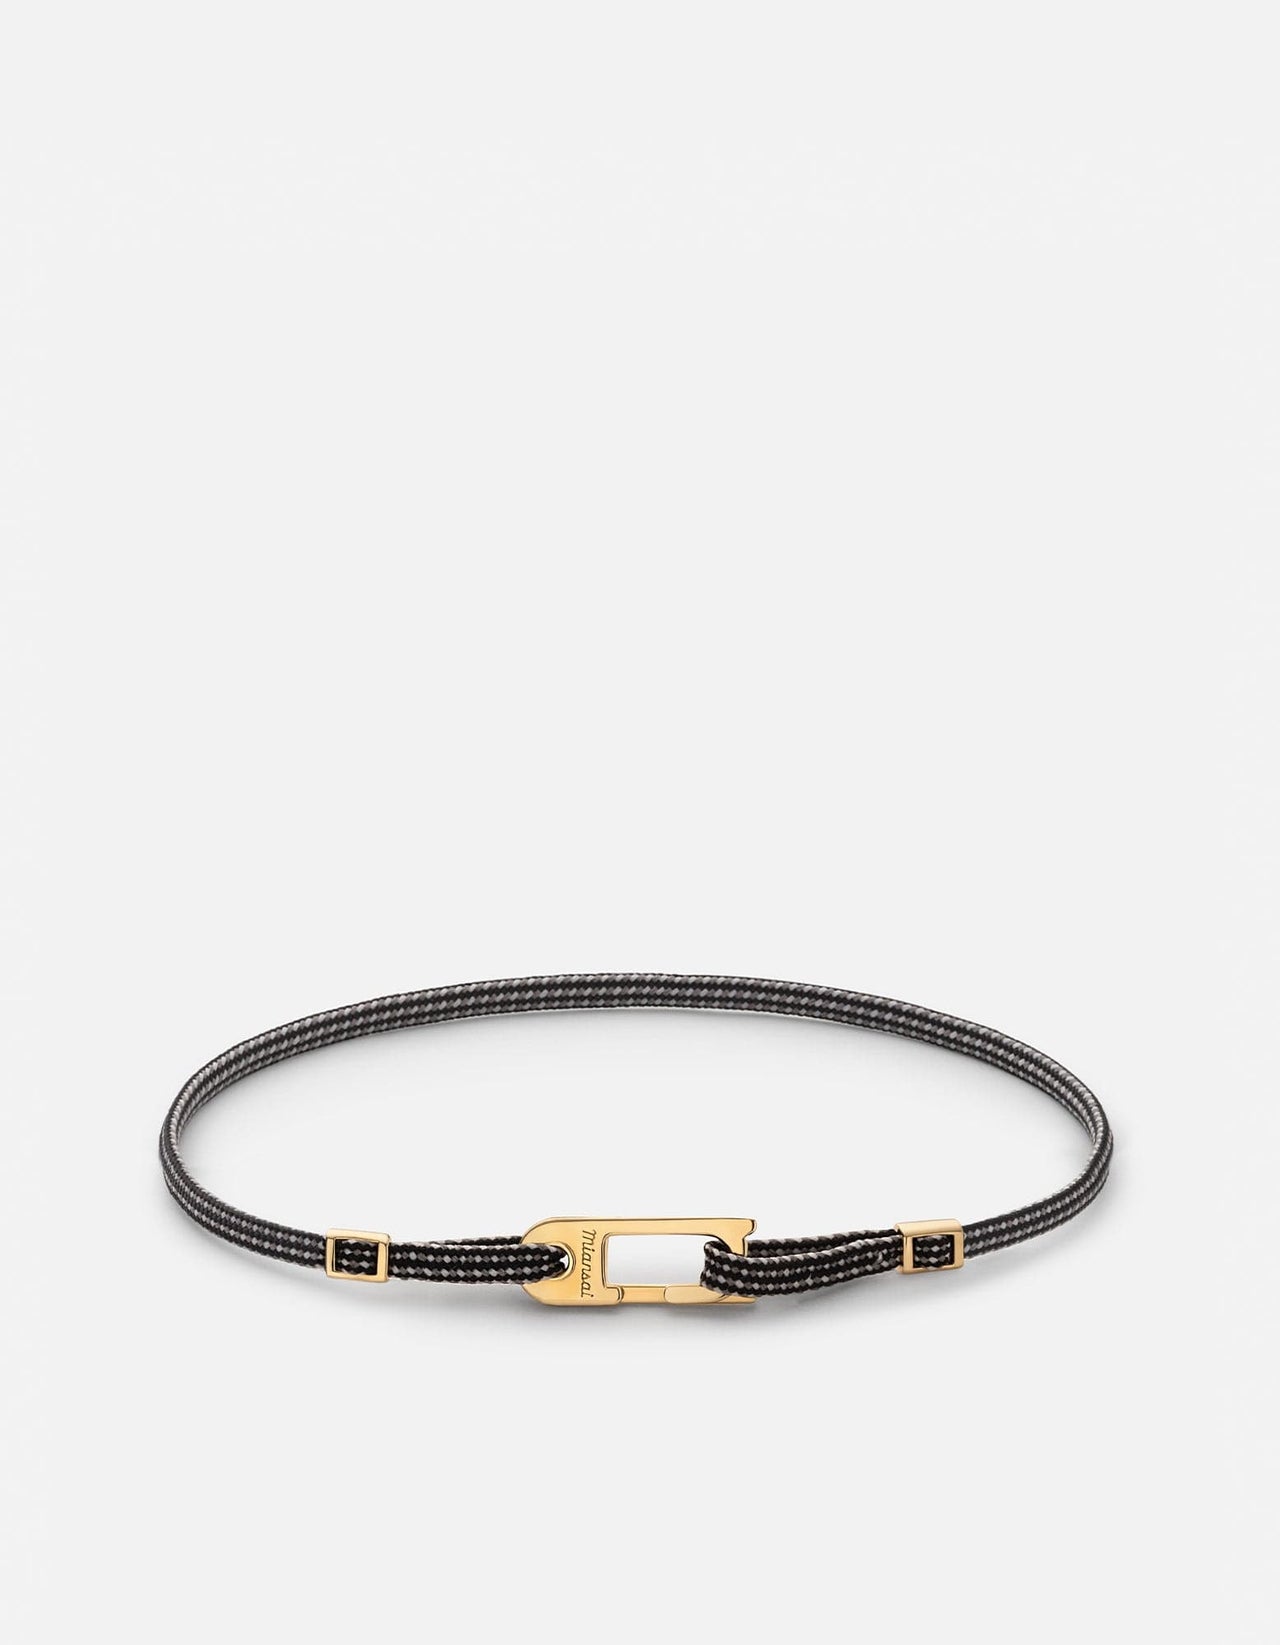 Orson Pull Bungee Rope Bracelet, Gold Vermeil, Men's Bracelets